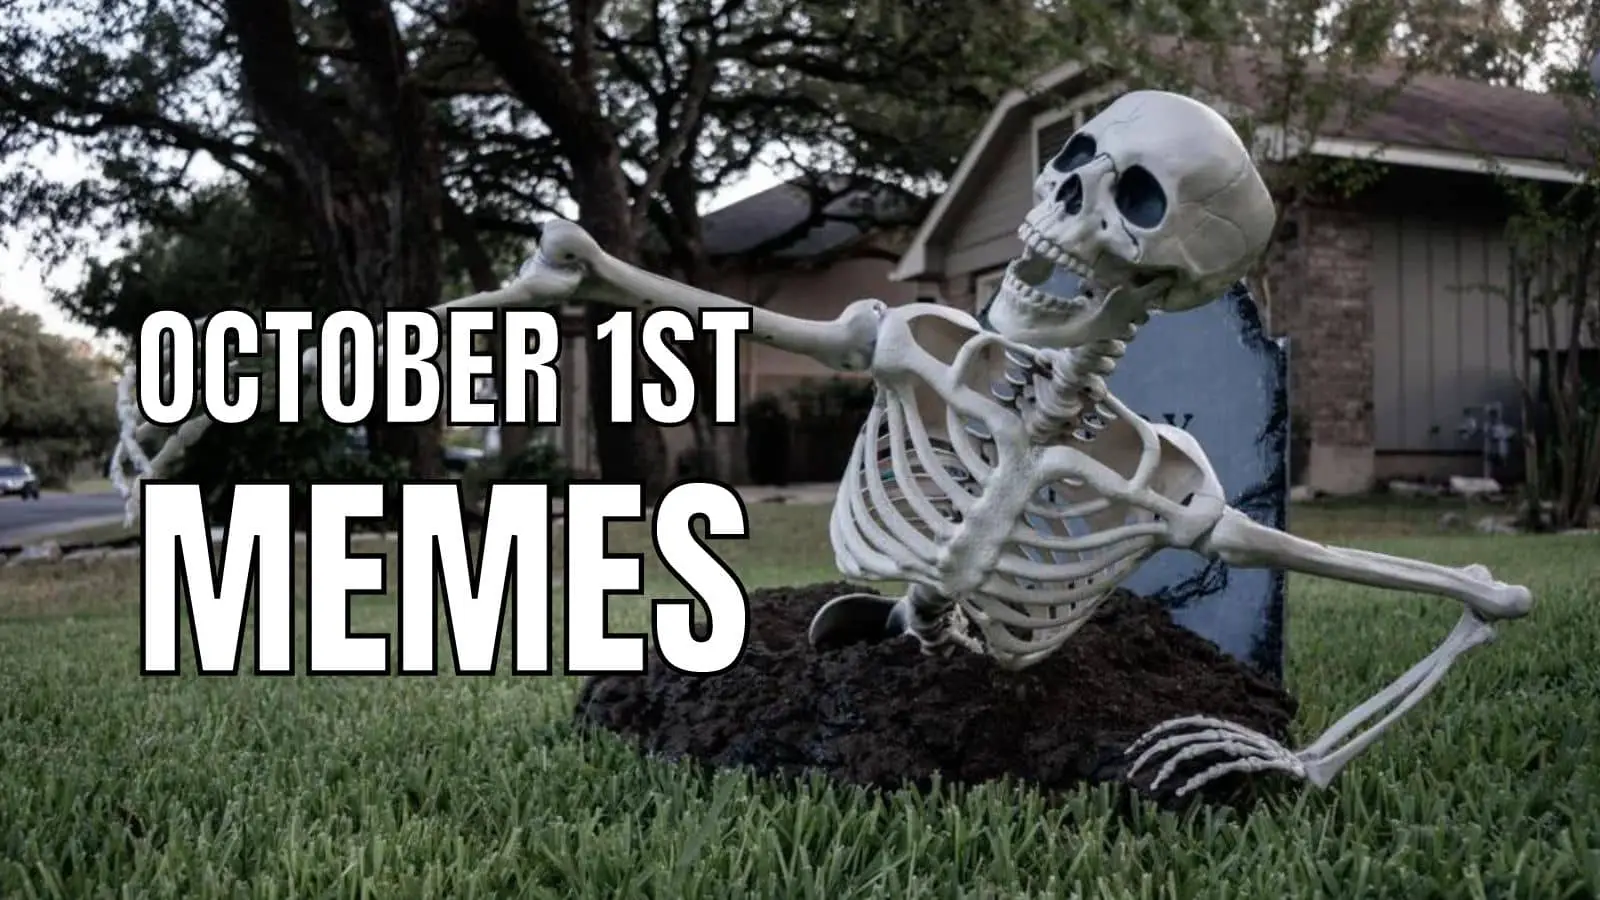 October 1st Memes on Skeleton